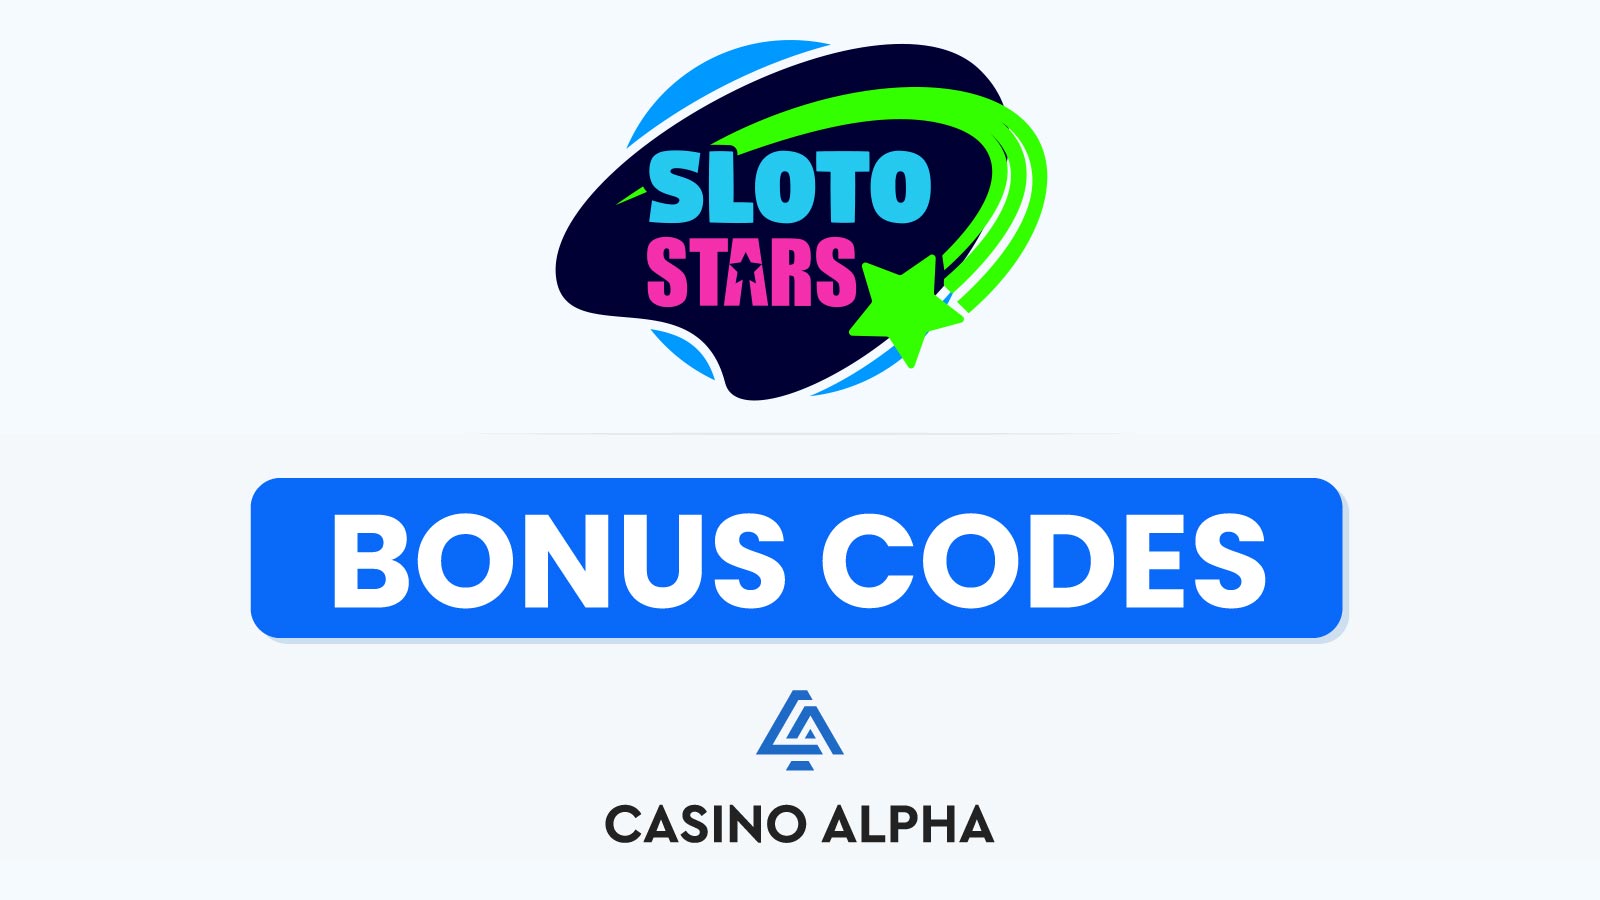 sloto stars promo code